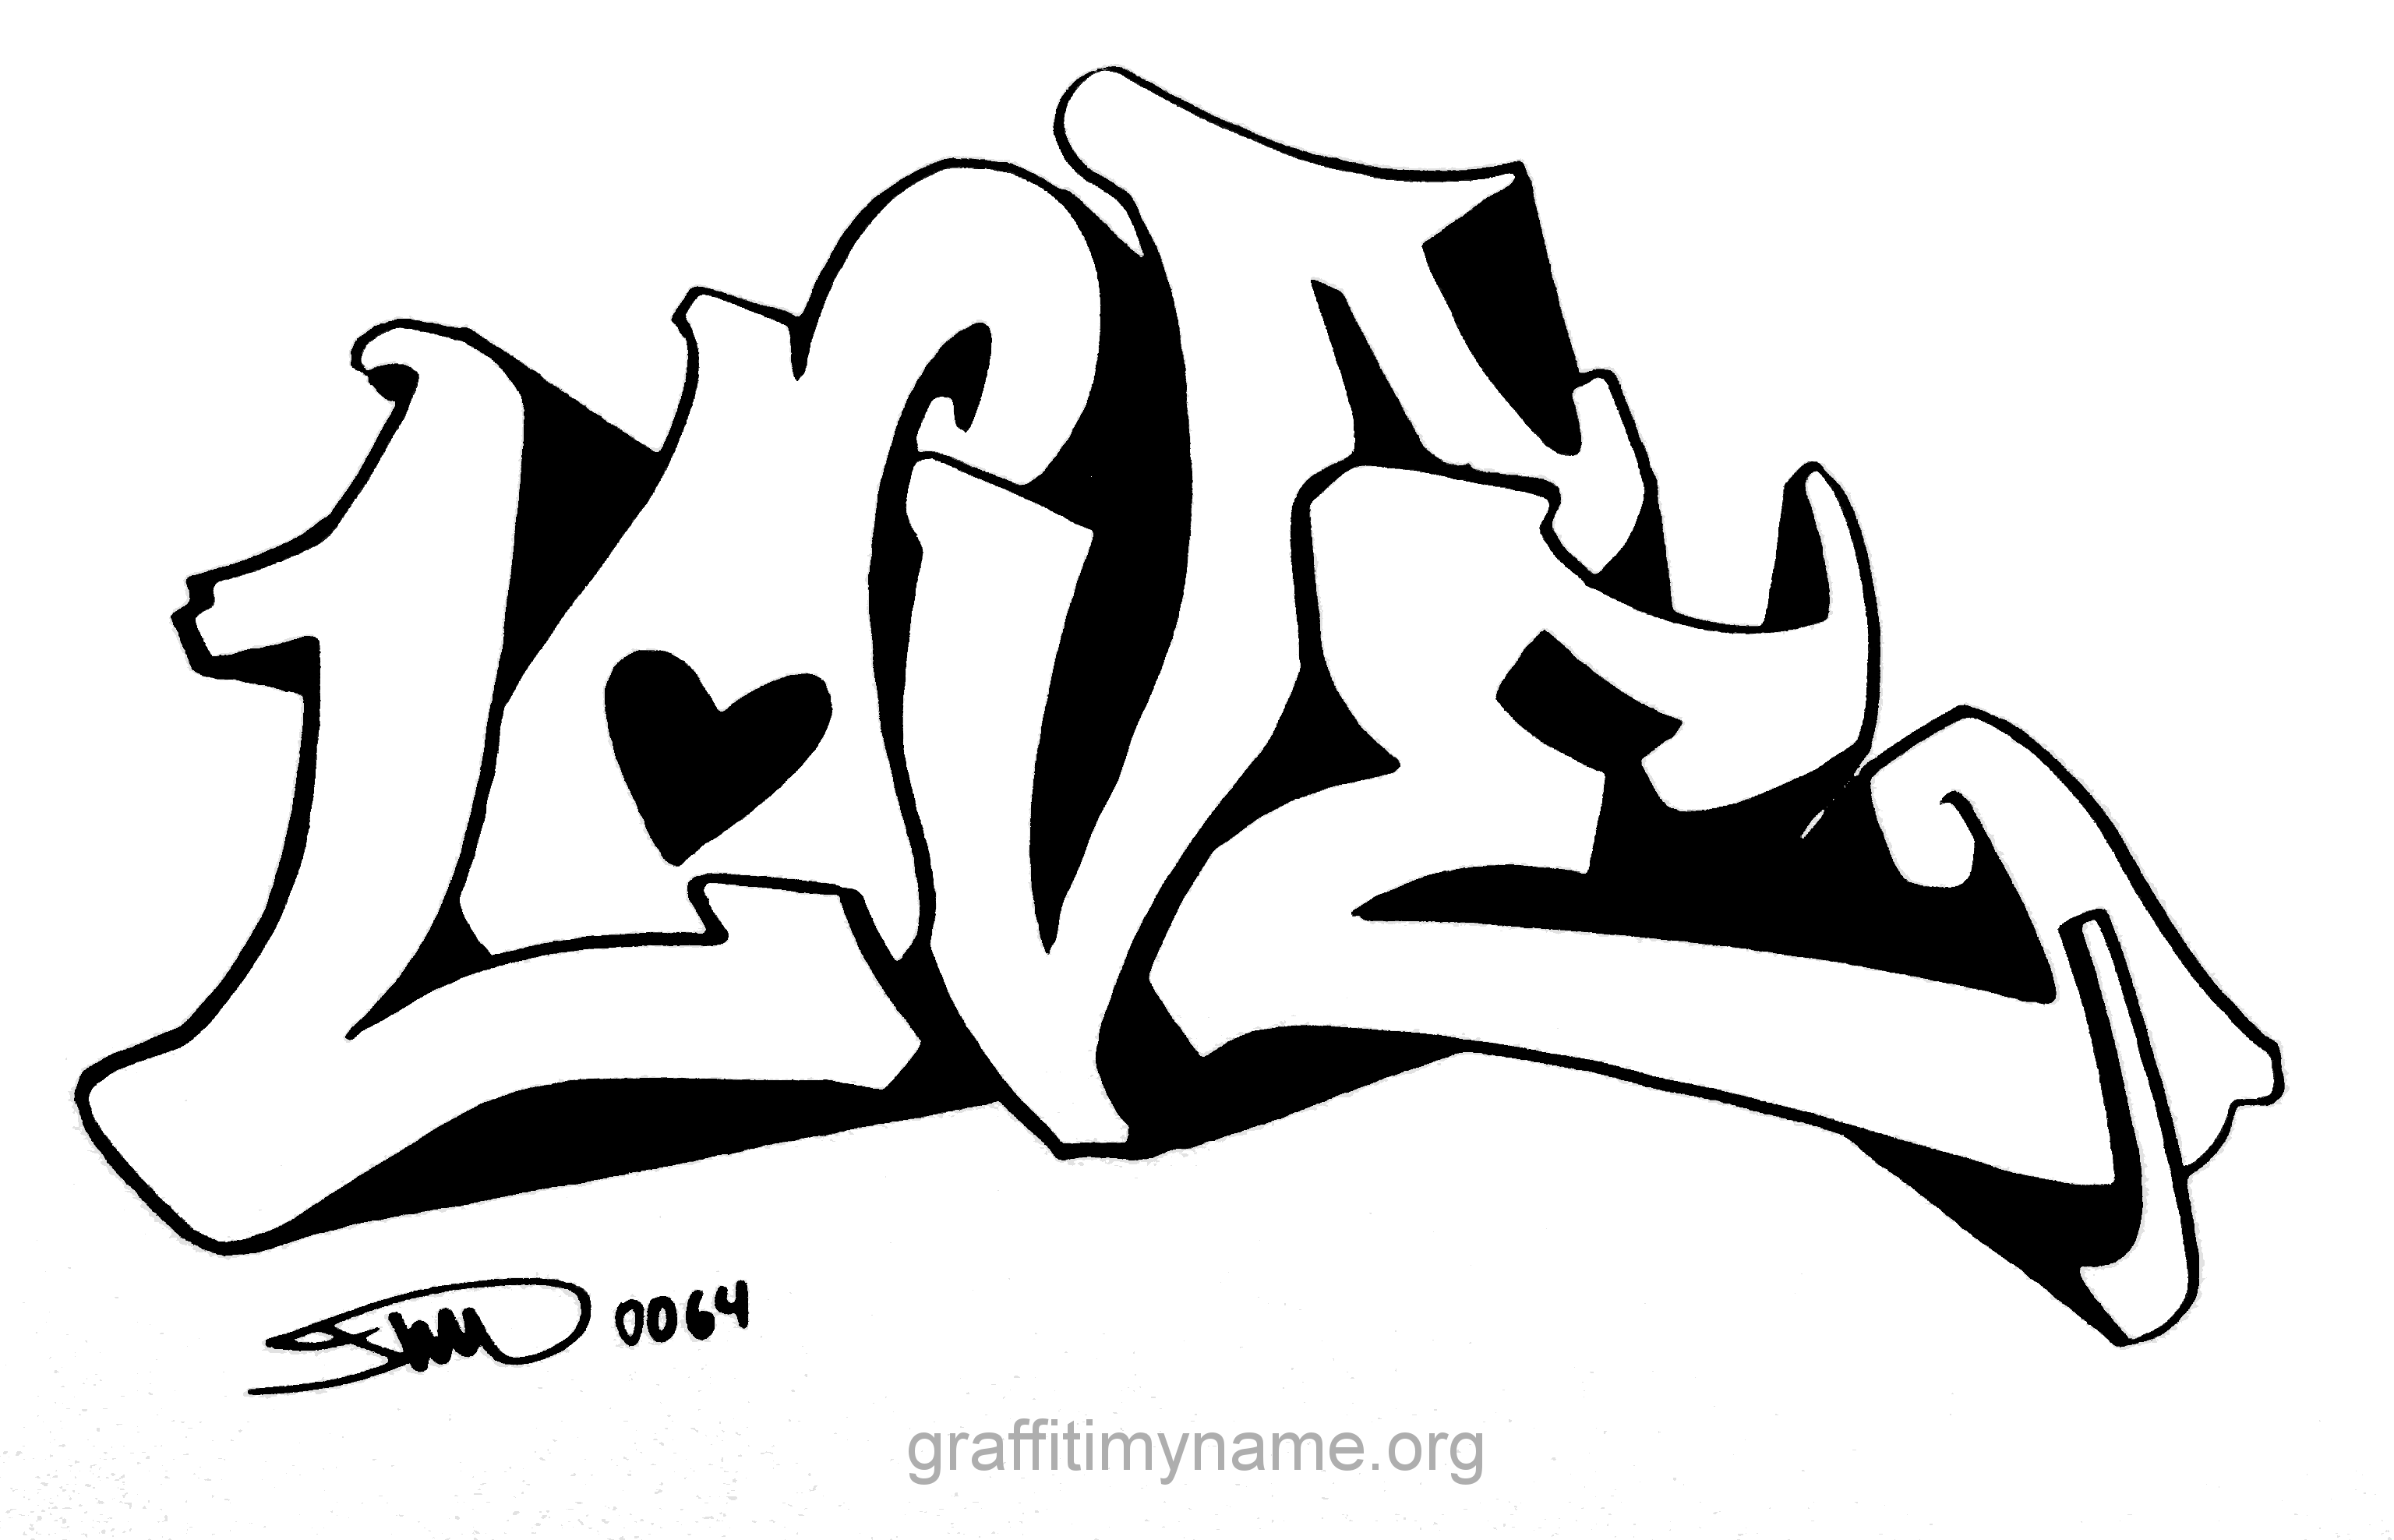  Gambar  Graffiti  I Love  You  Sobgrafiti